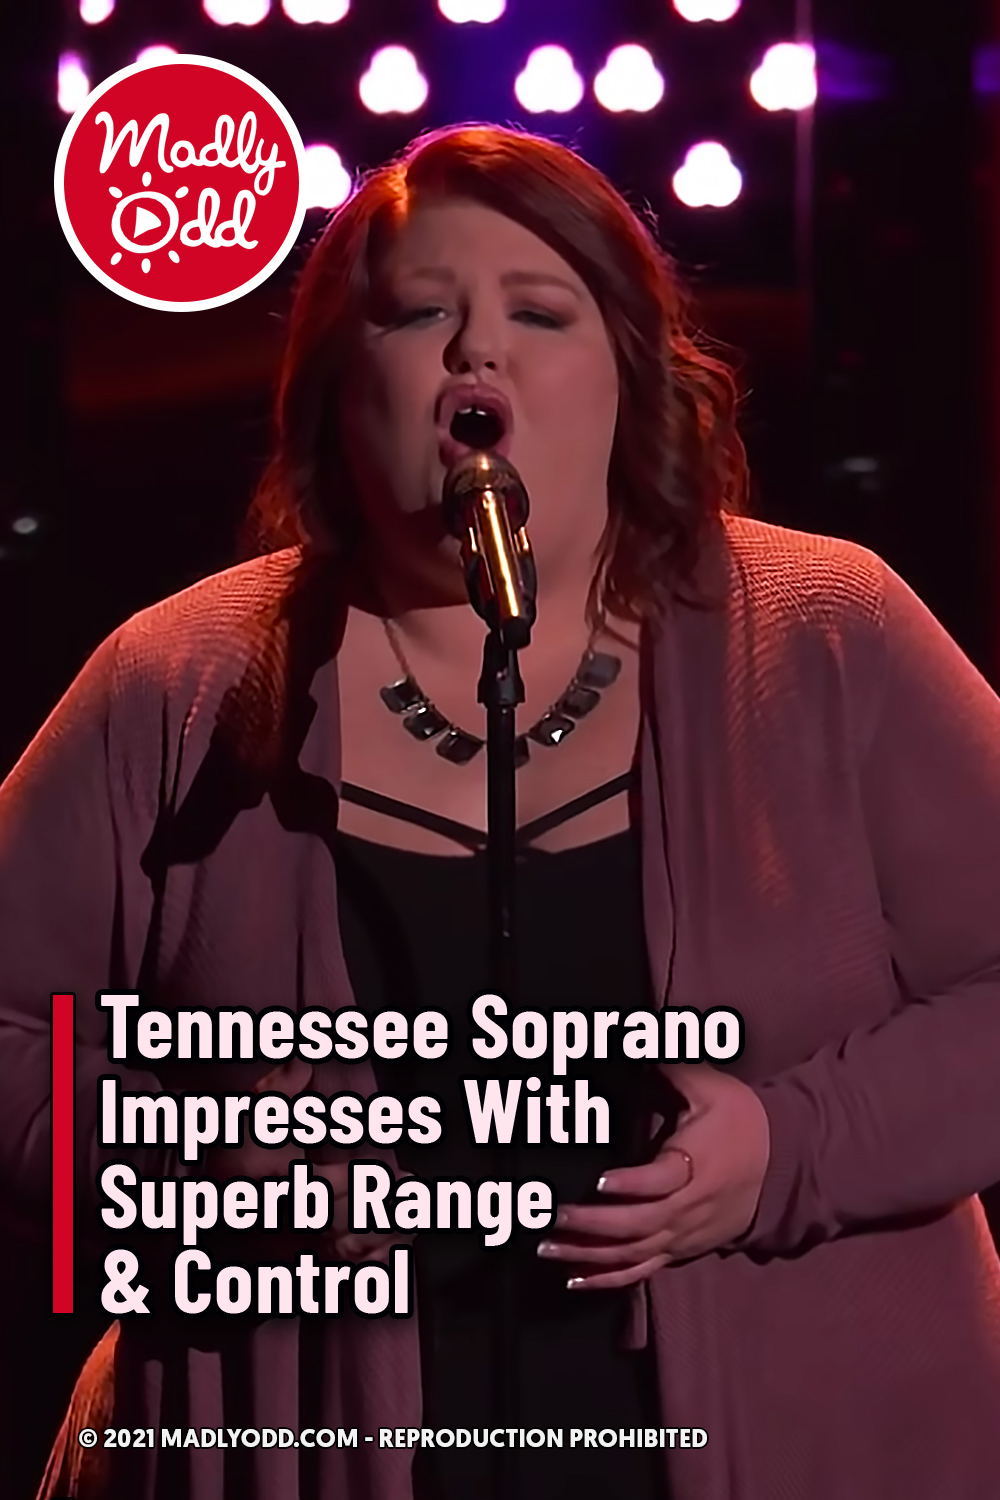 Tennessee Soprano Impresses With Superb Range & Control